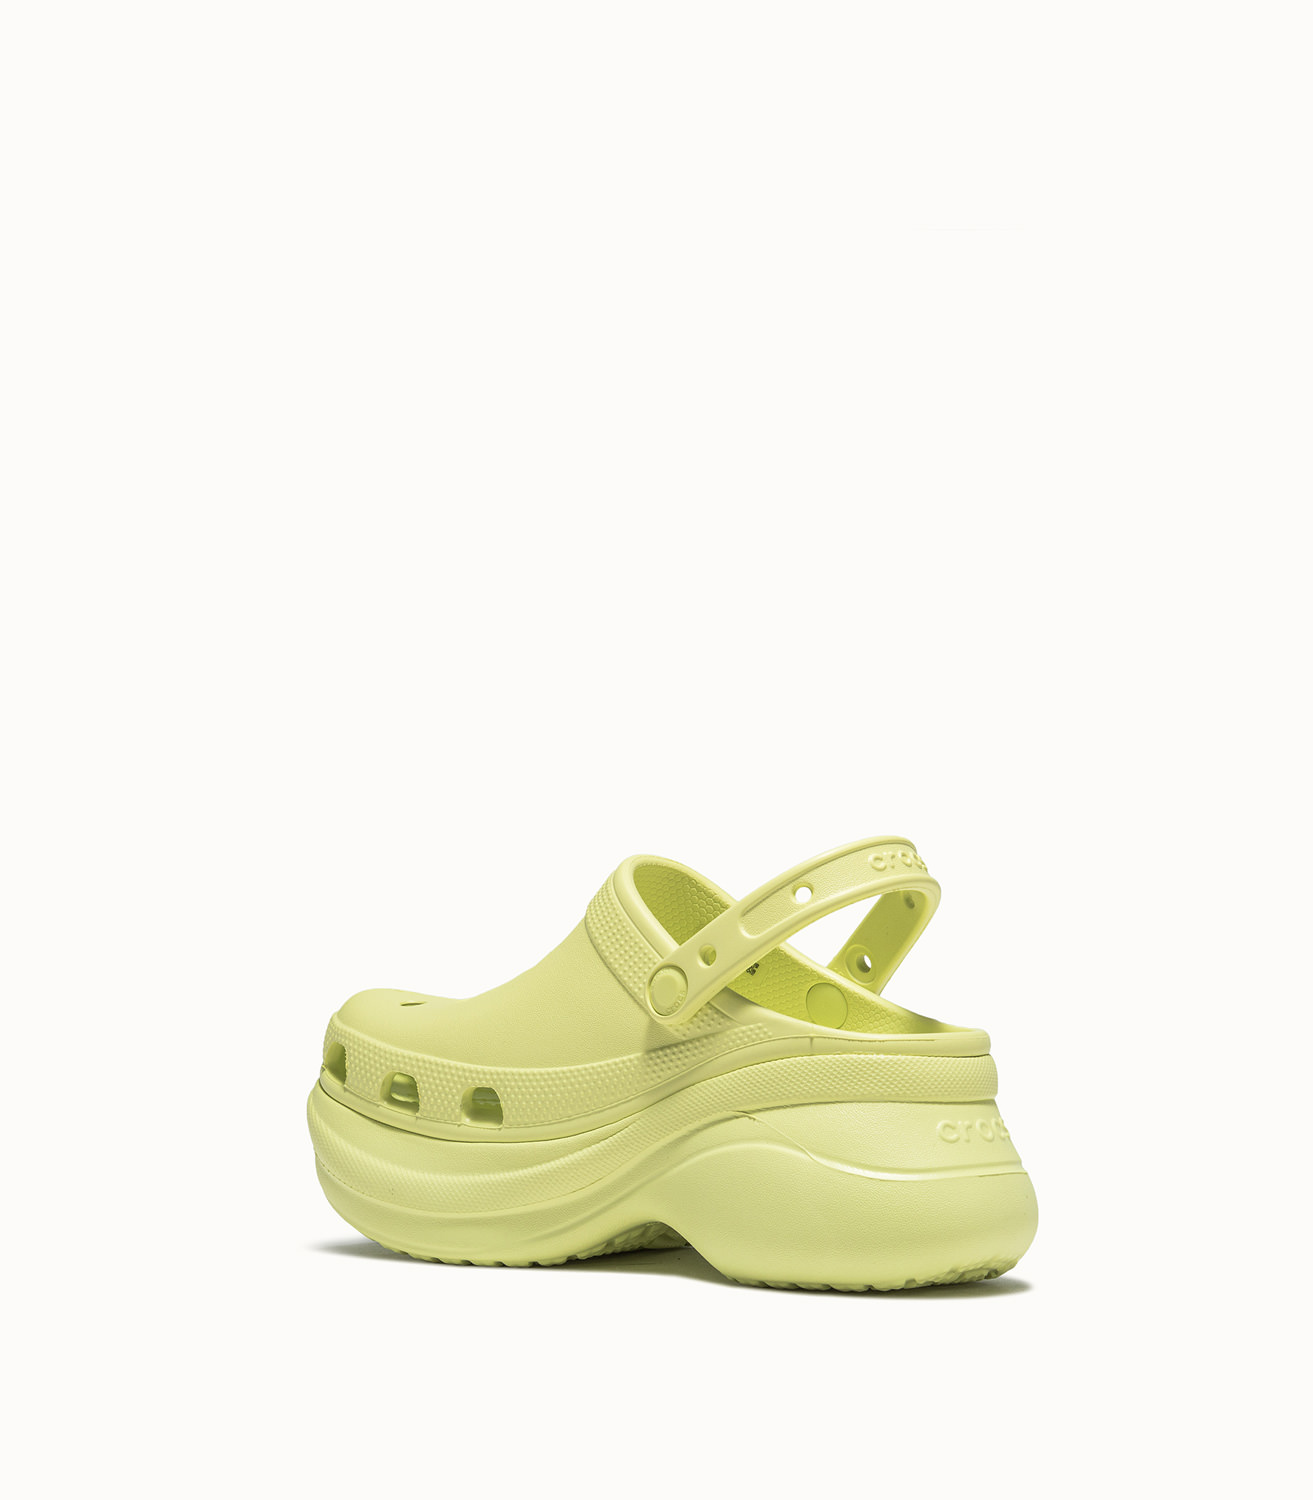 yellow bae crocs